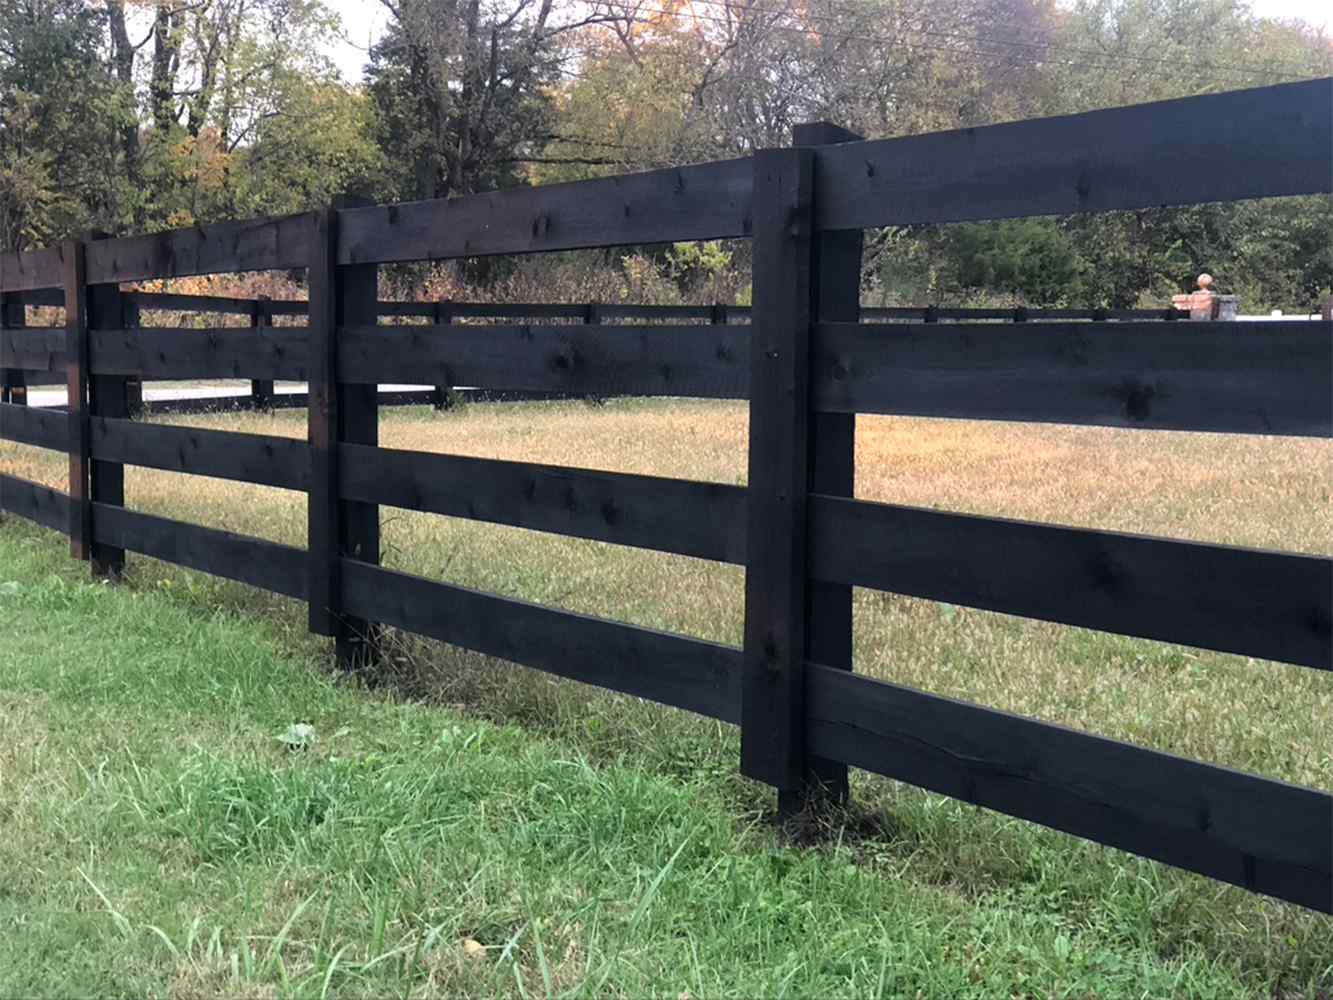 Nashville Wood Fences Restoration project photo